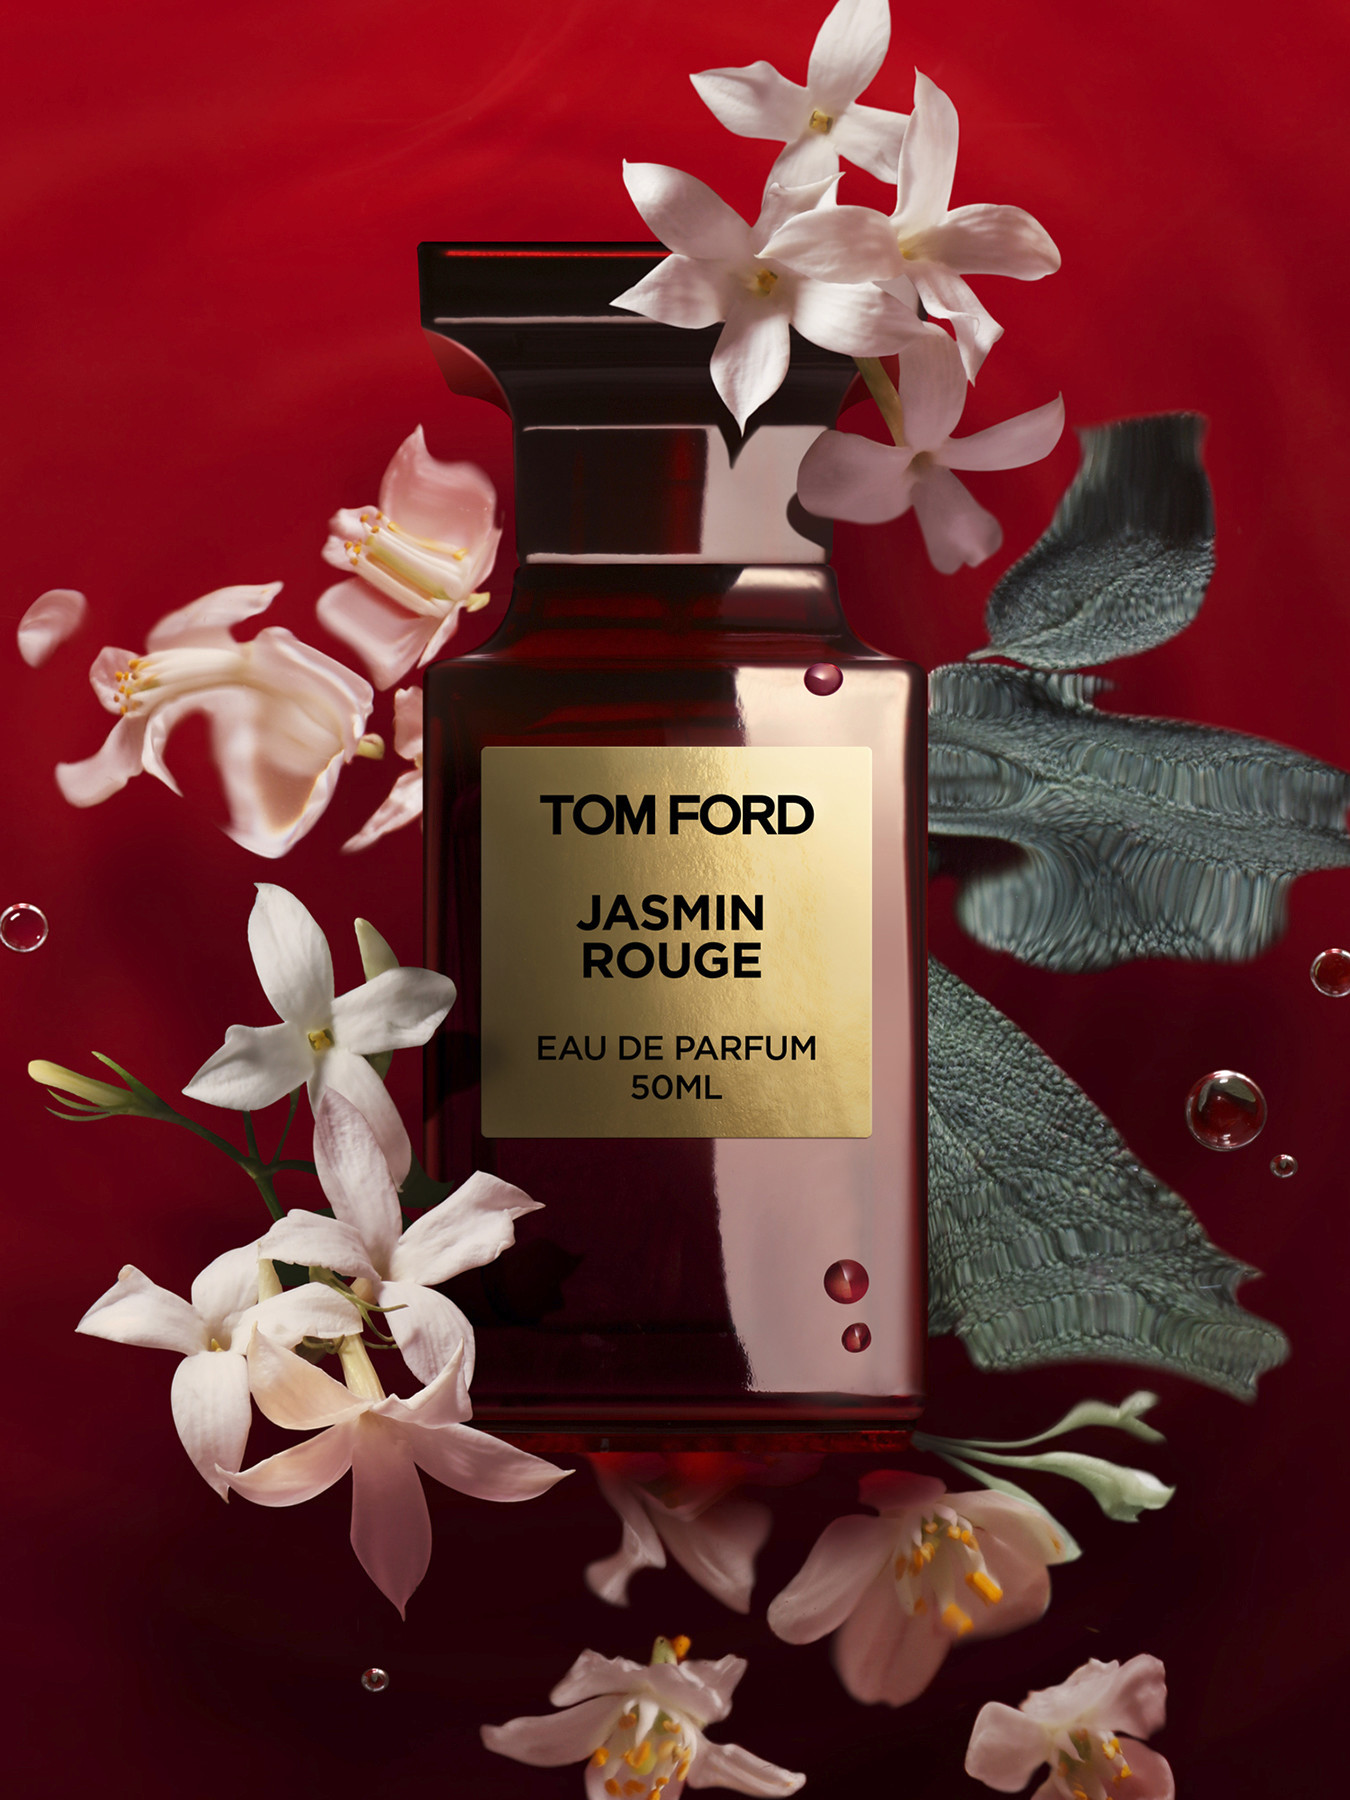 Tom Ford Jasmin Rouge Eau de Parfum 50 ml | Fenwick